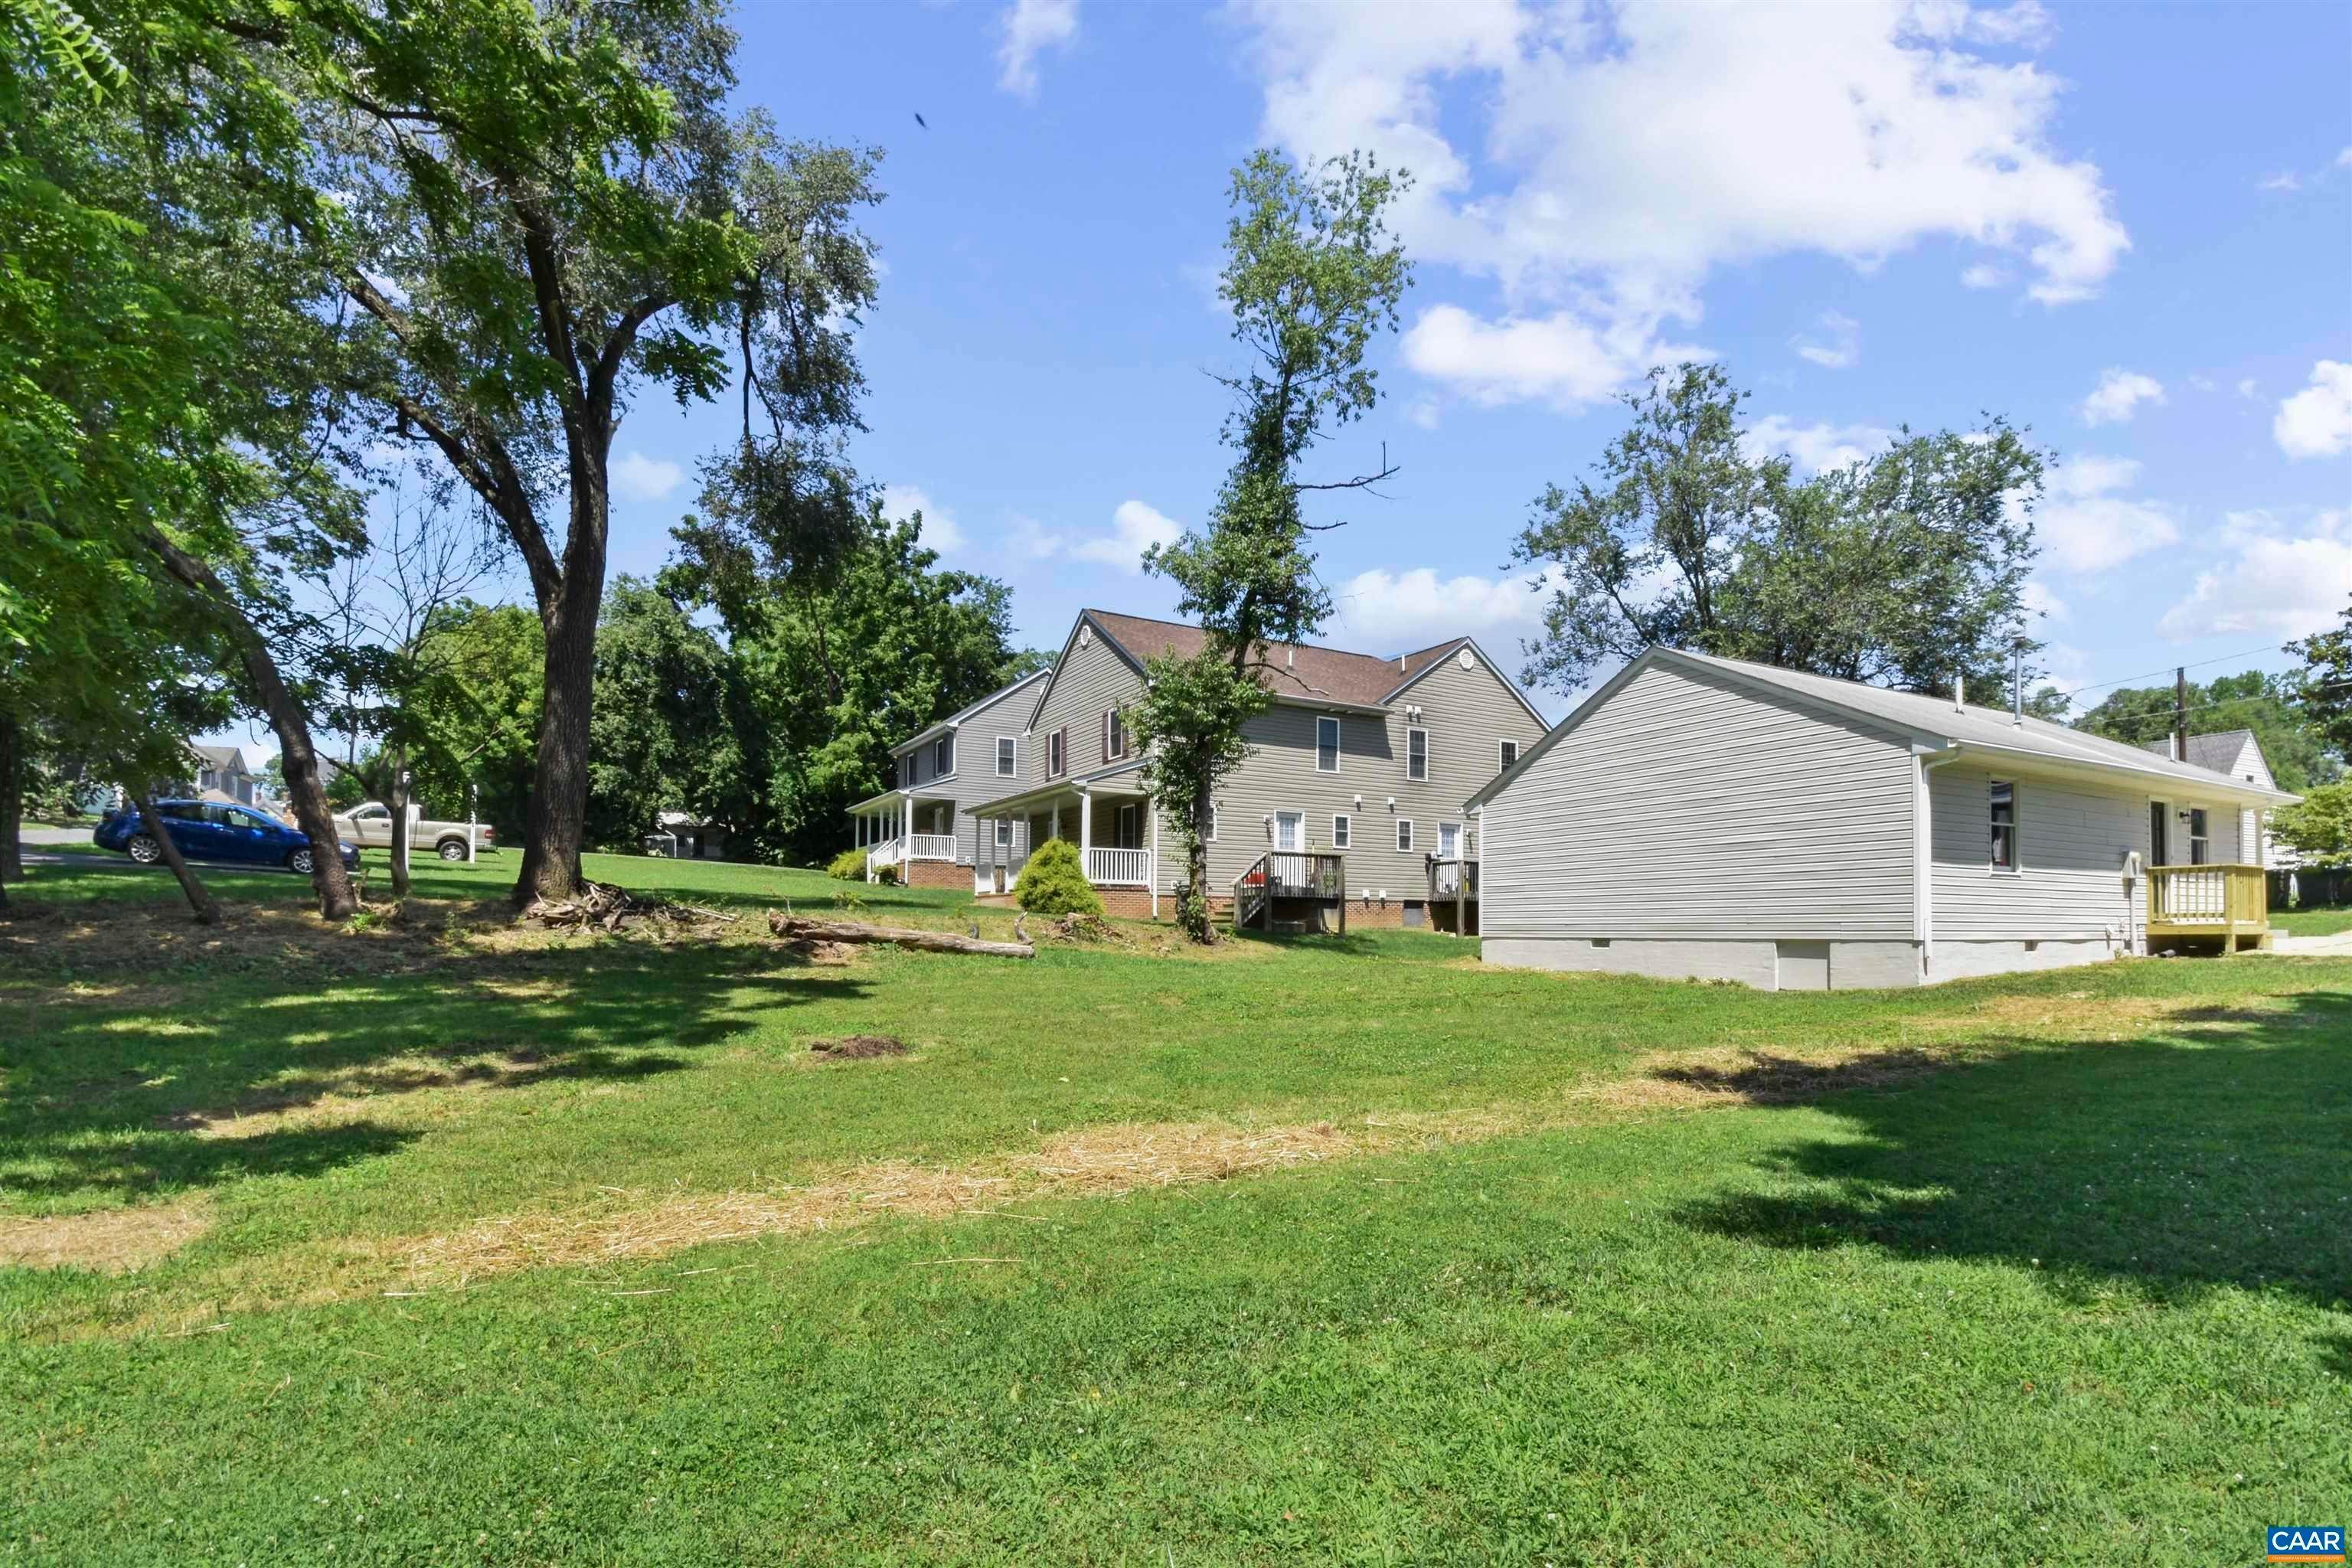 19. Single Family Homes for Sale at 416 BETA Street Waynesboro, Virginia 22980 United States